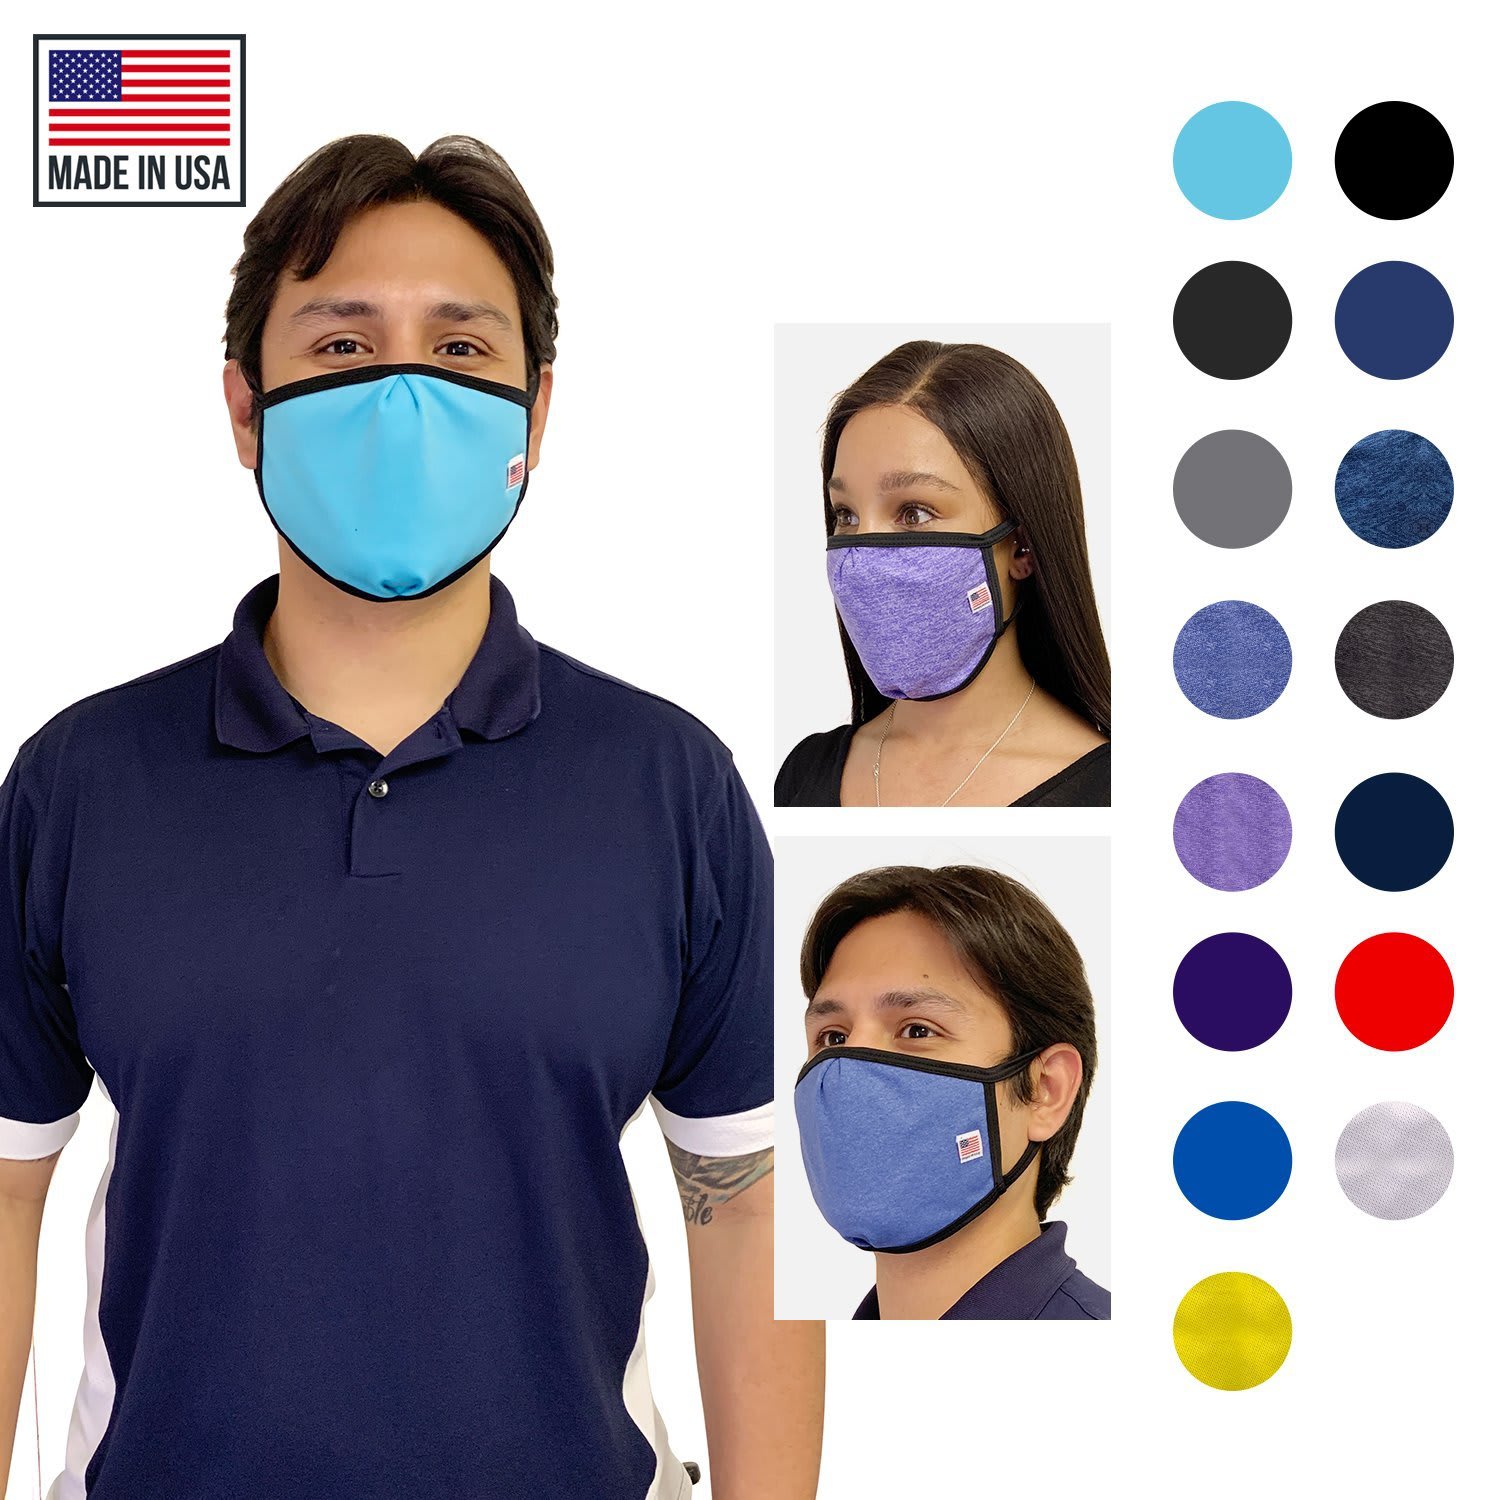 Made in USA Disposable & Reusable Face Masks